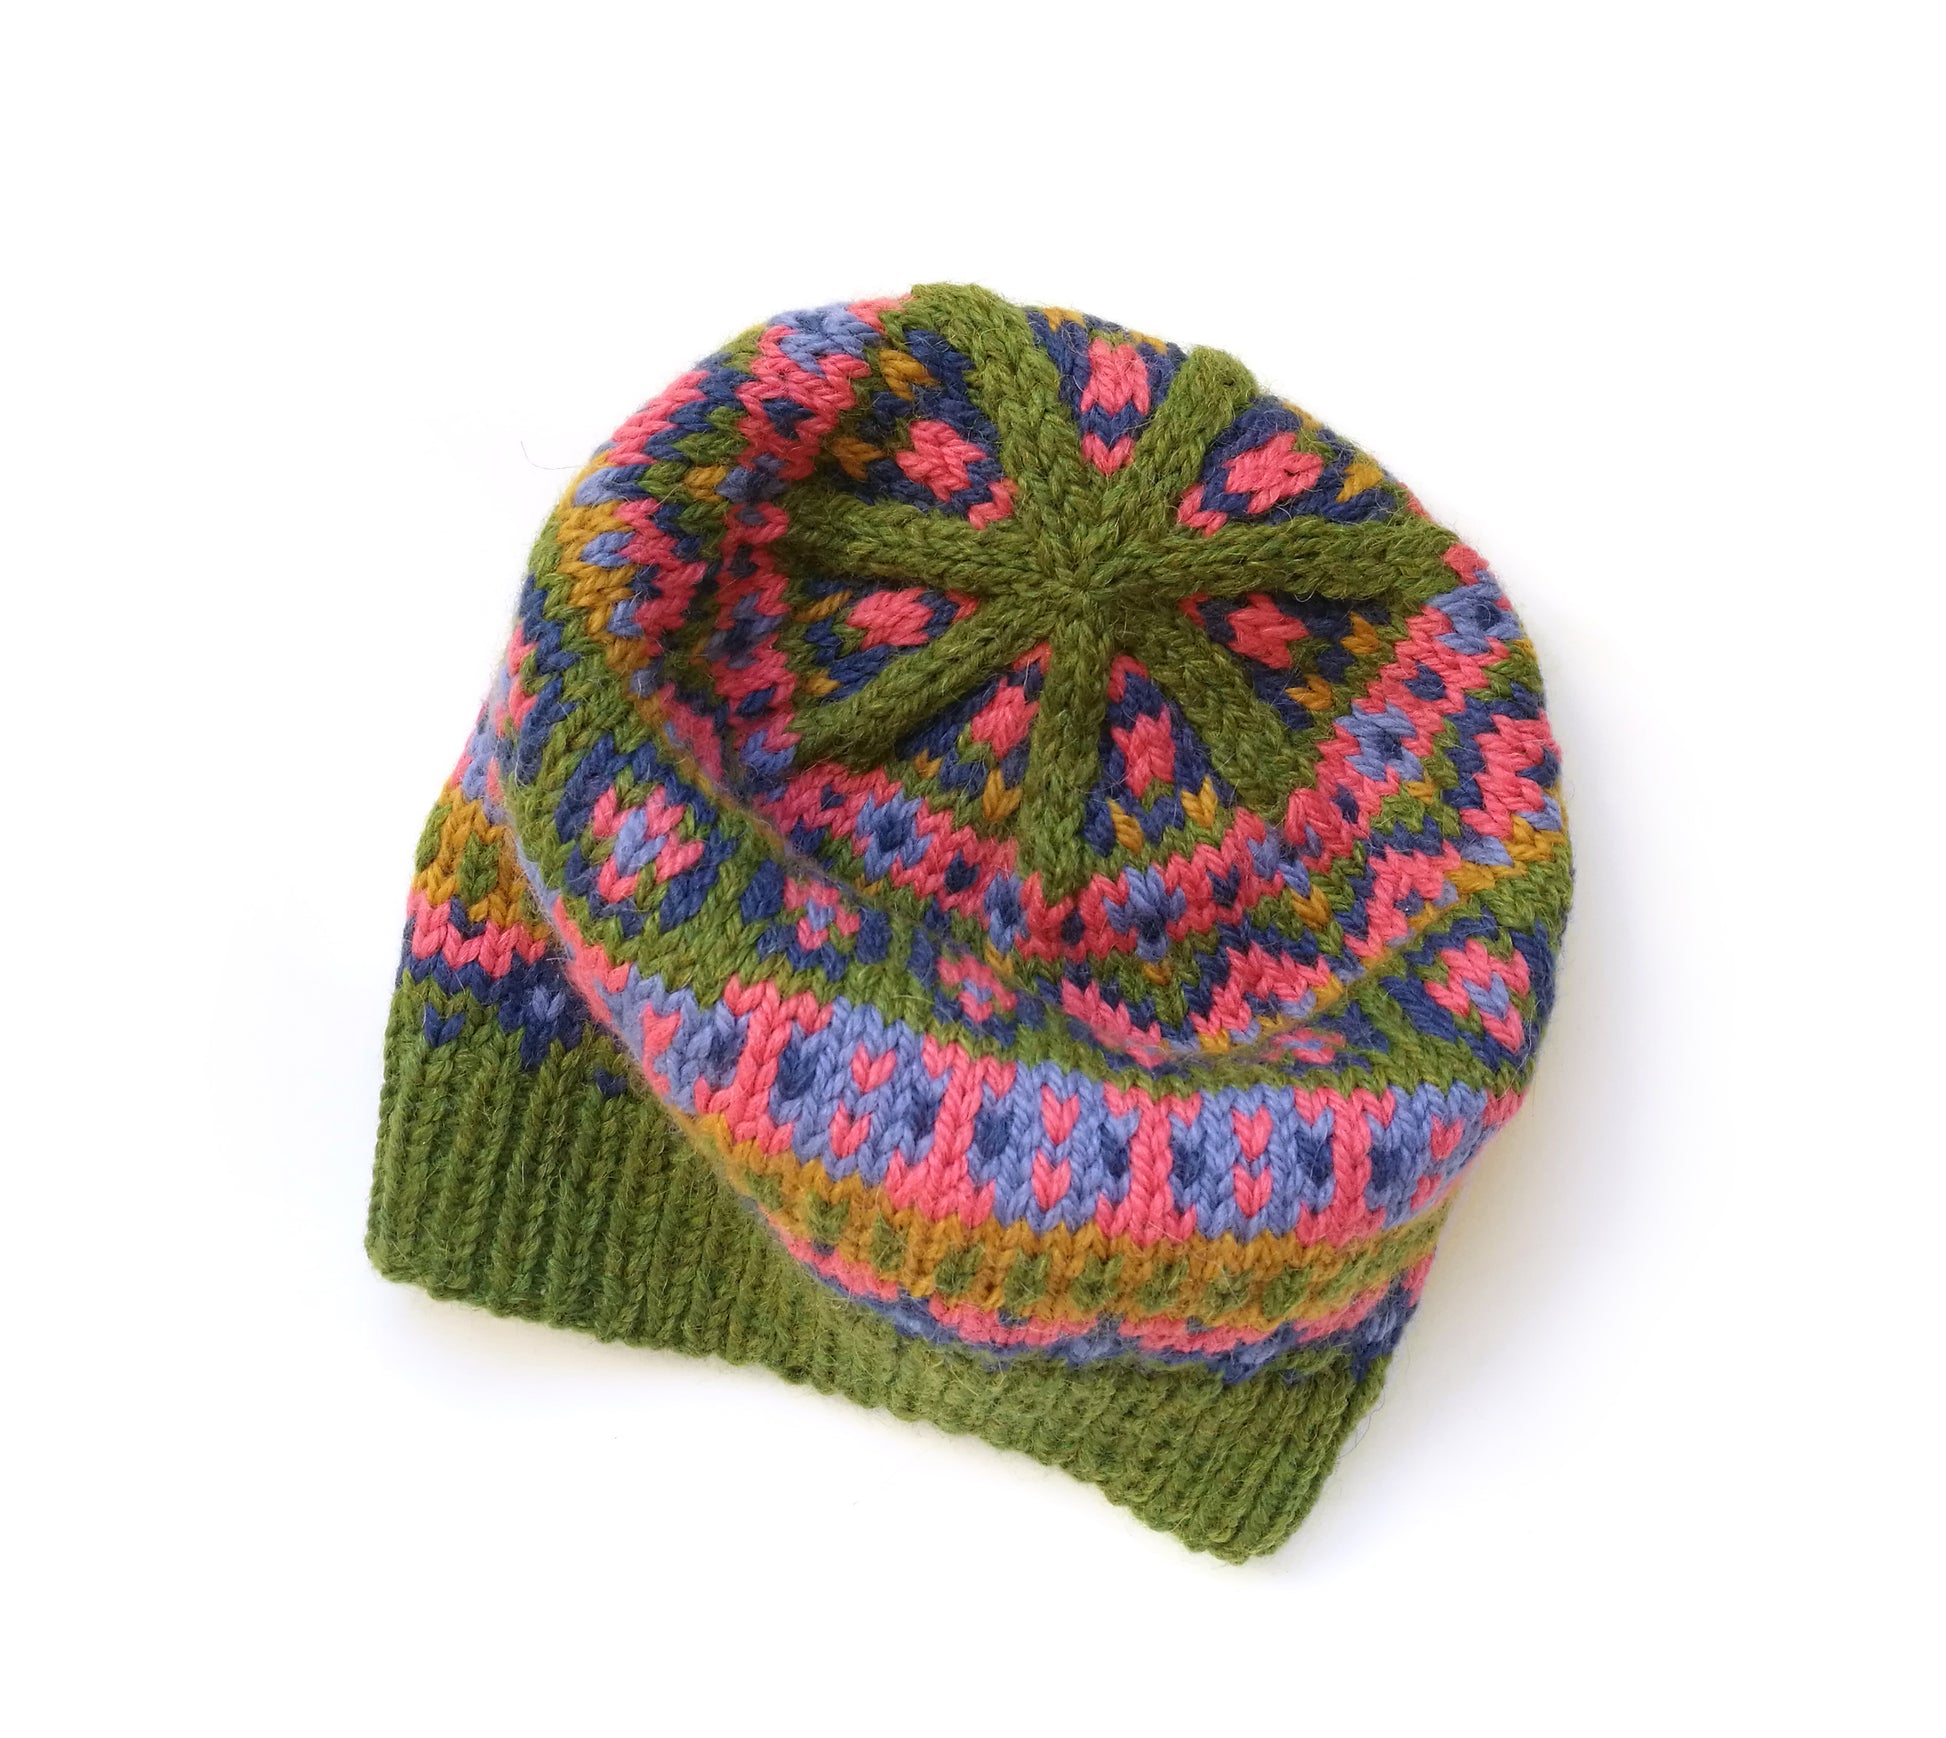 Hand-knitted Fair Isle hat in Bergen knitting pattern